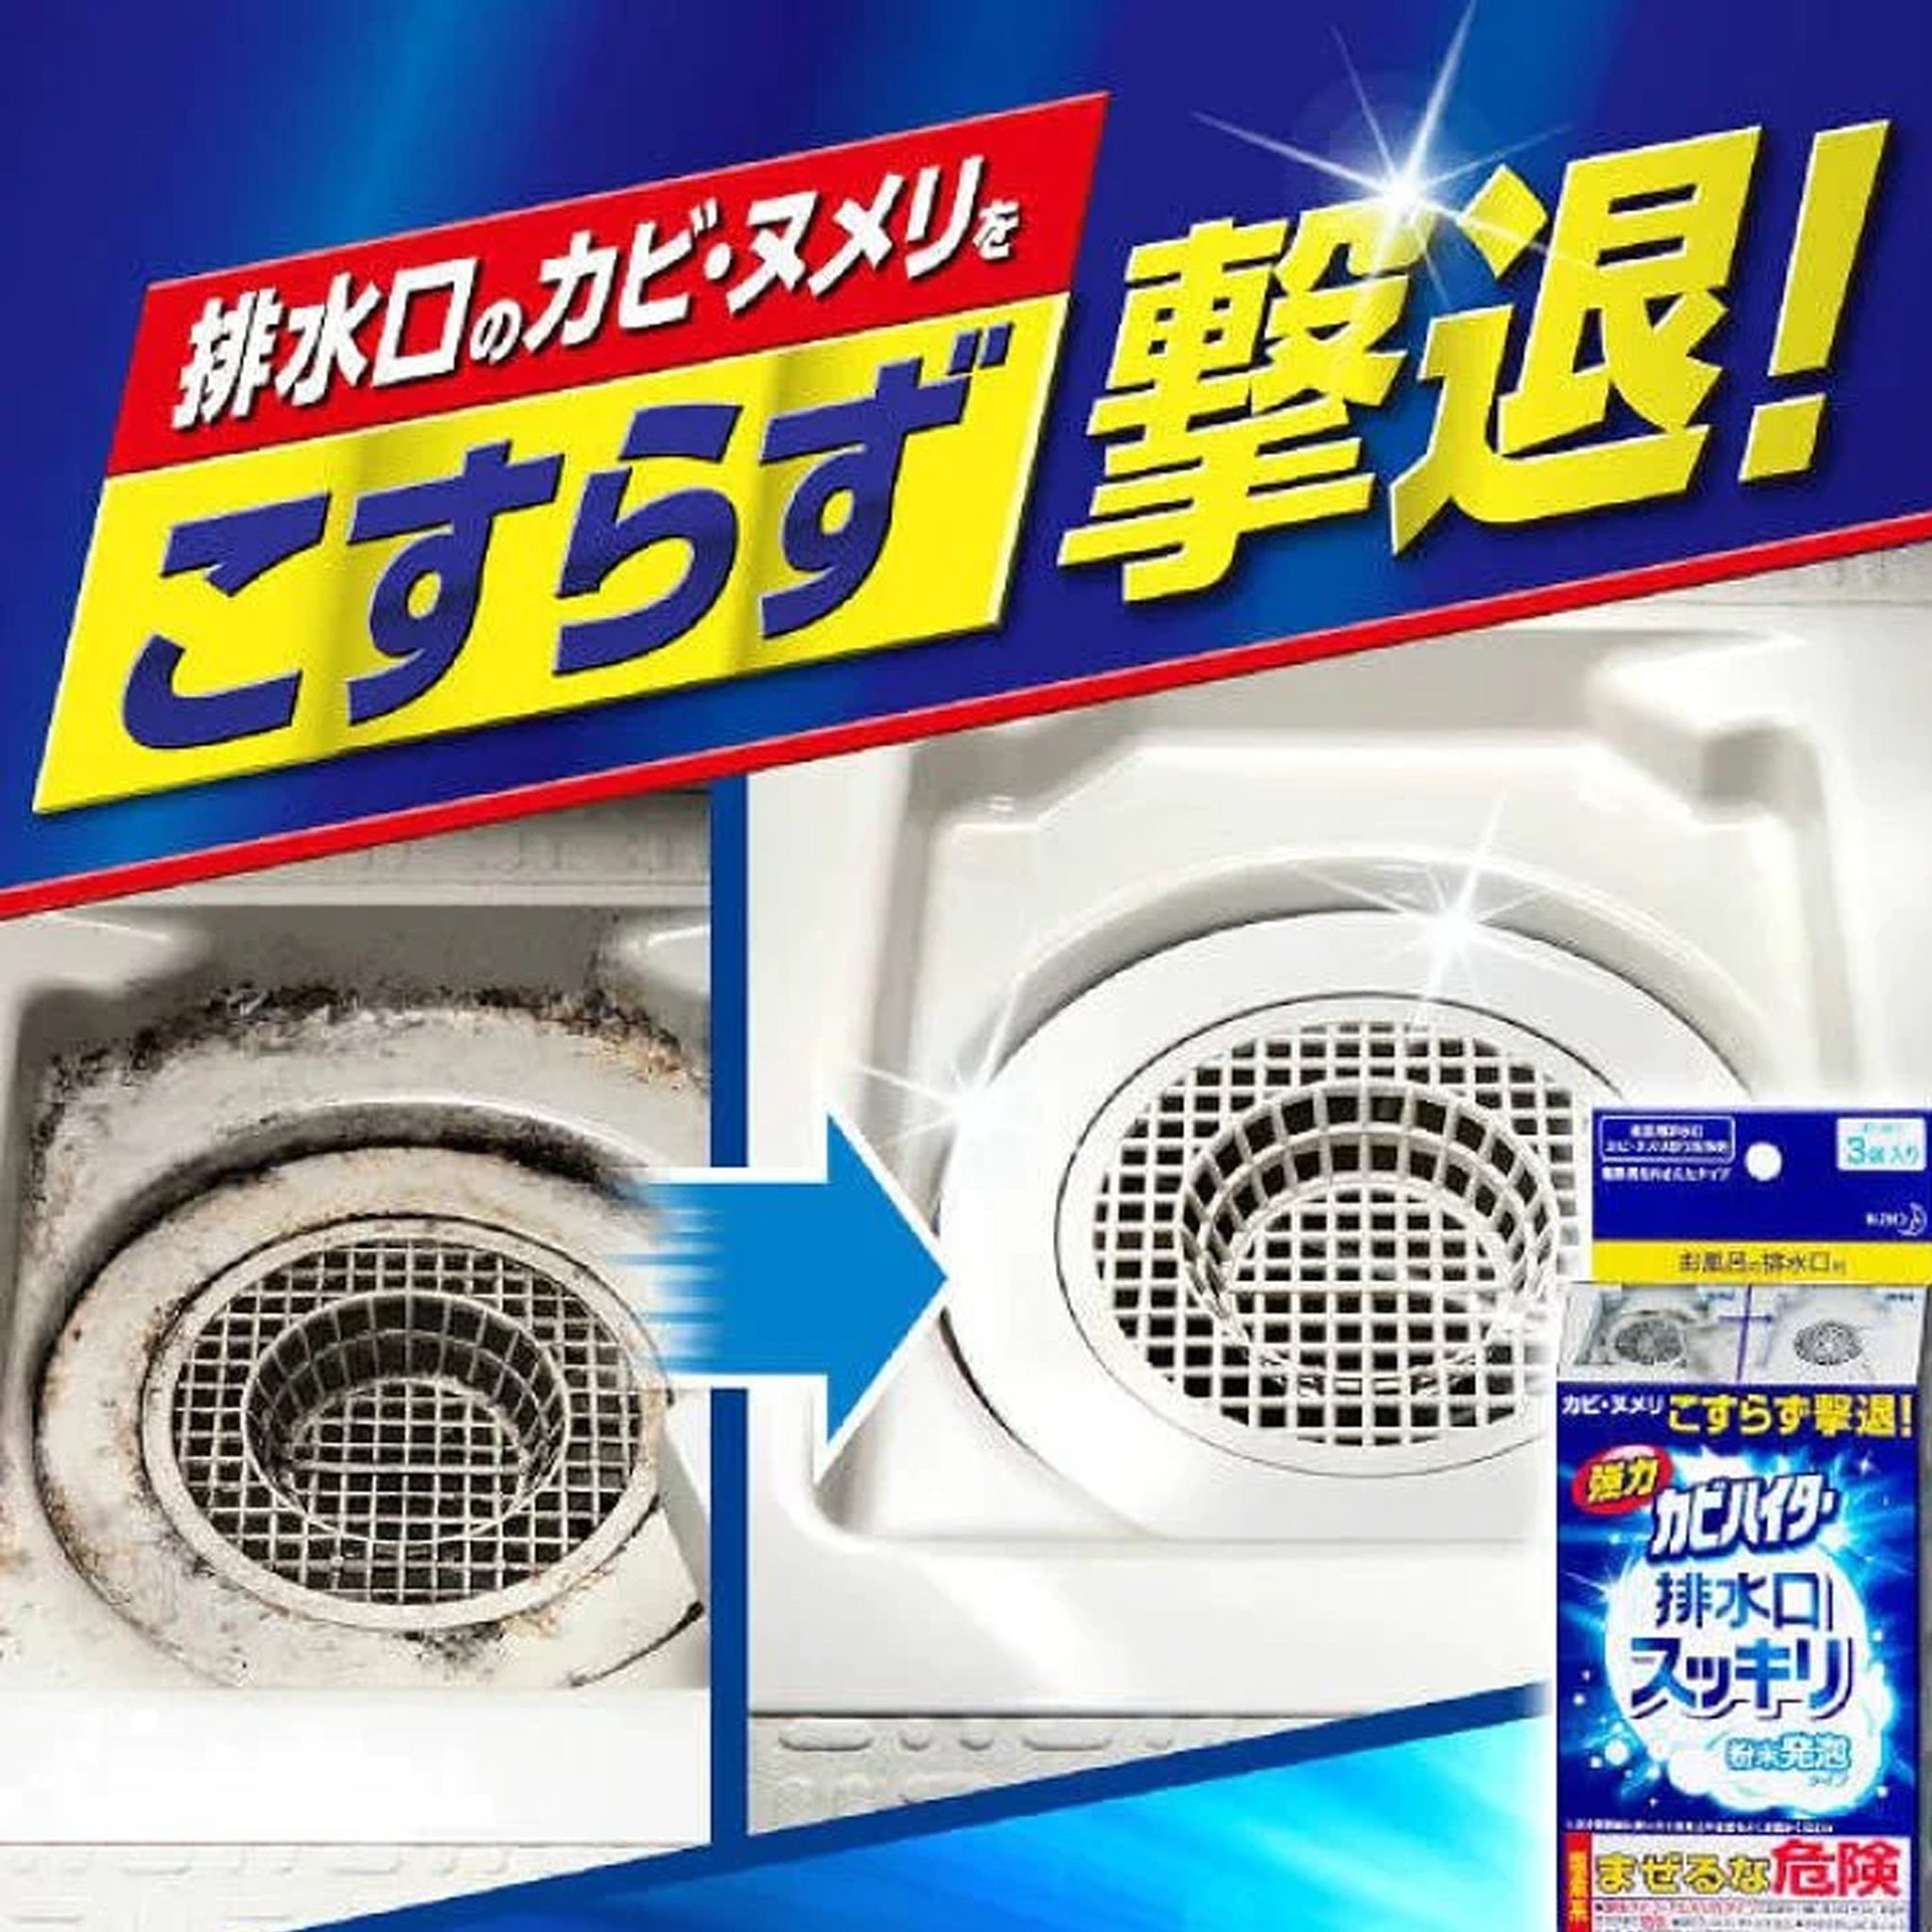 KAO Bathroom Drain Cleaning Powder 3 Pack